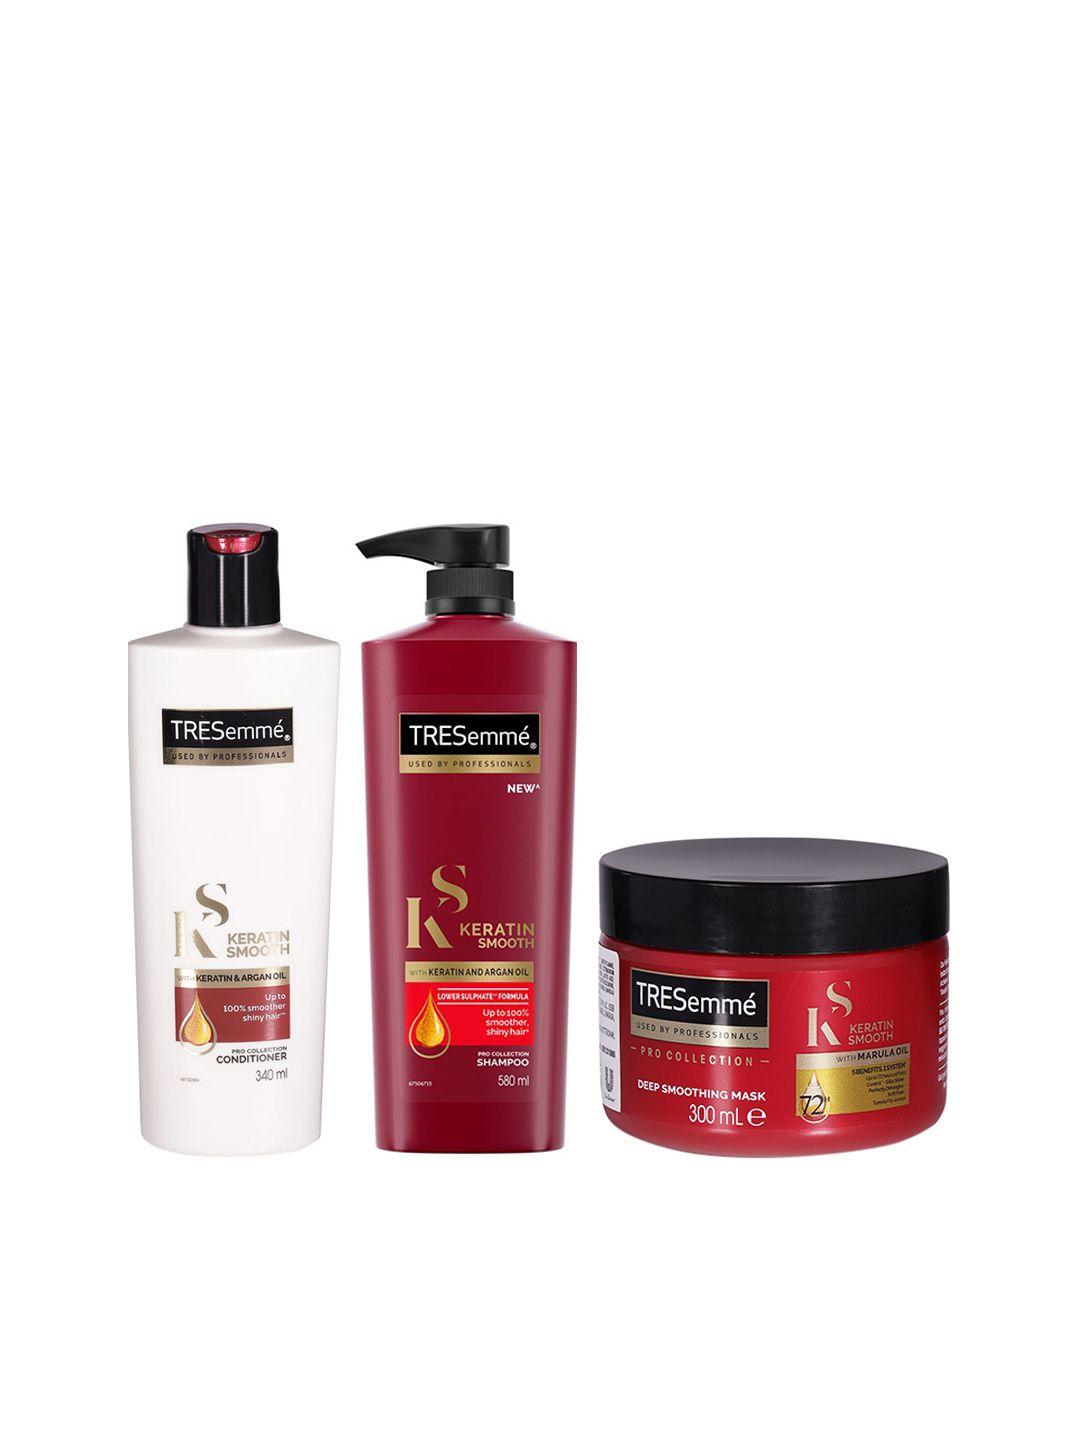 tresemme set of keratin smooth shampoo - conditioner & hair mask